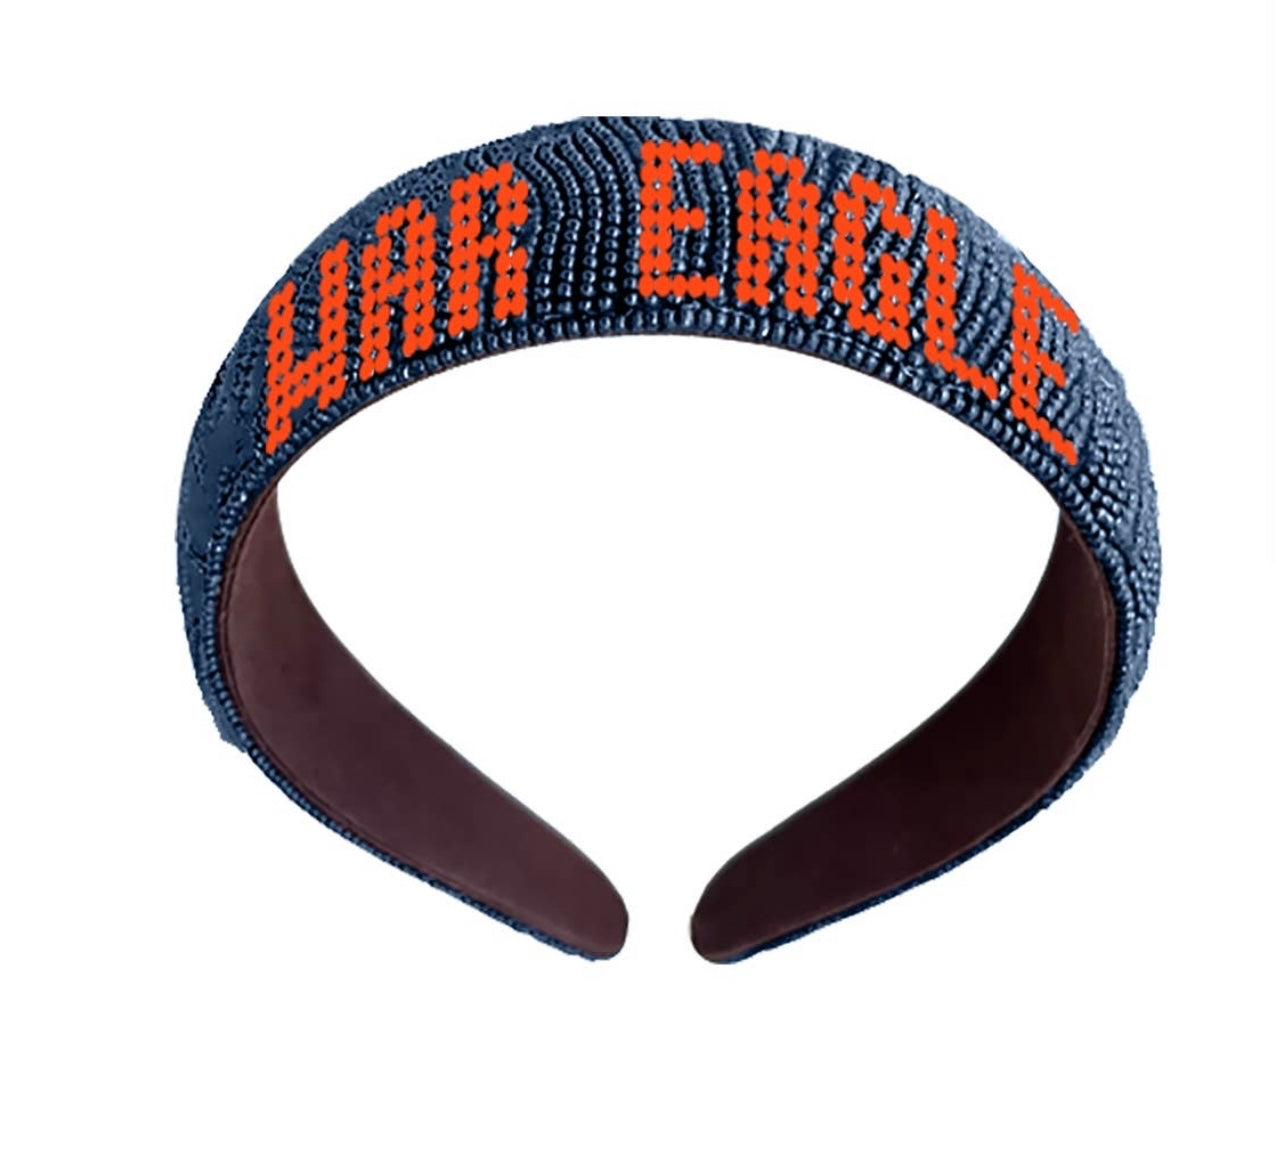 Orange and navy blue "War Eagles" beaded headband.